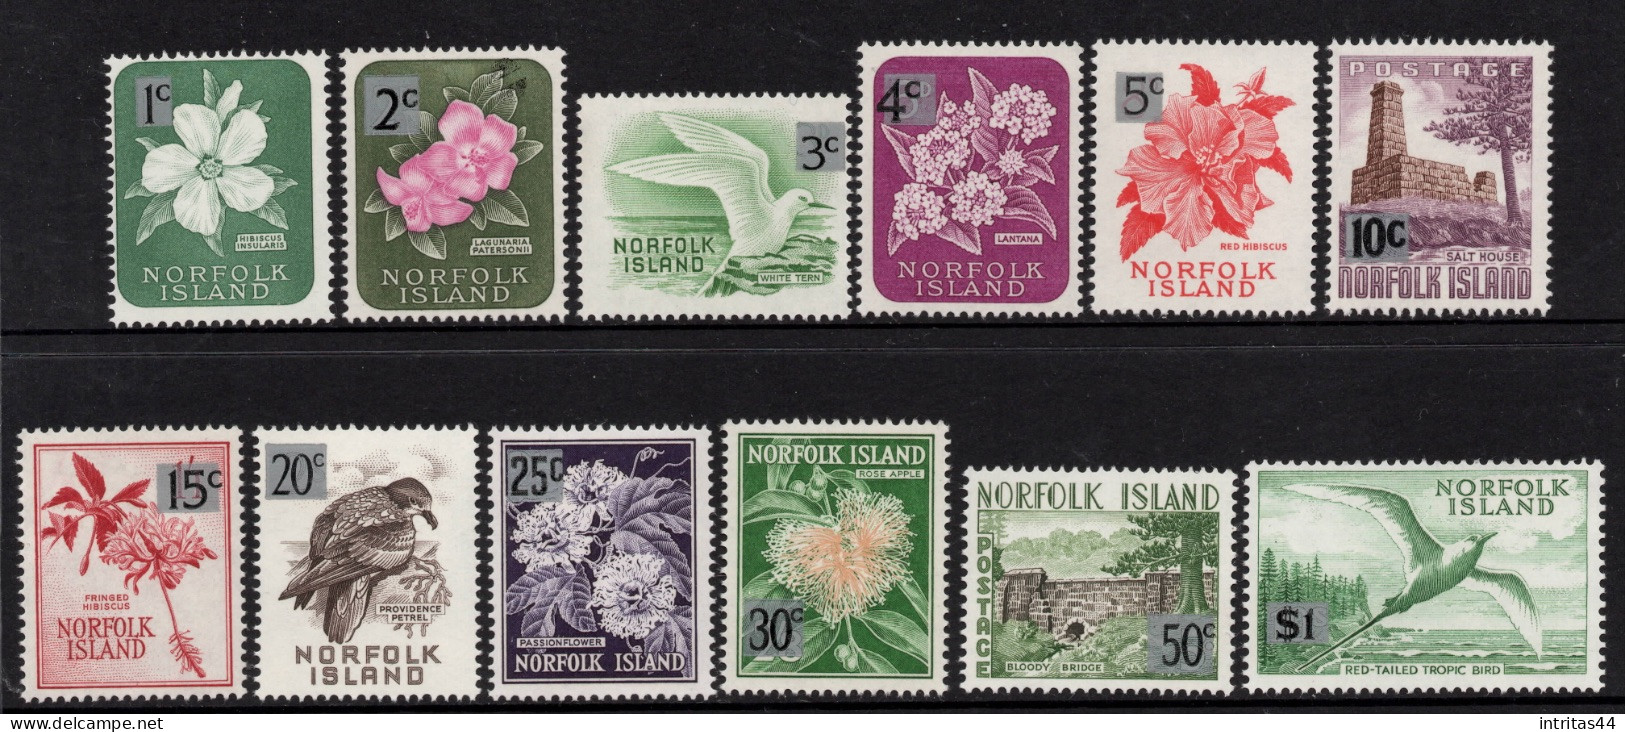 NORFOLK ISLAND 1966 SURCH "DECIMAL CURRENCY PICTORIALS" SET OF (12)   MNH - Norfolk Island